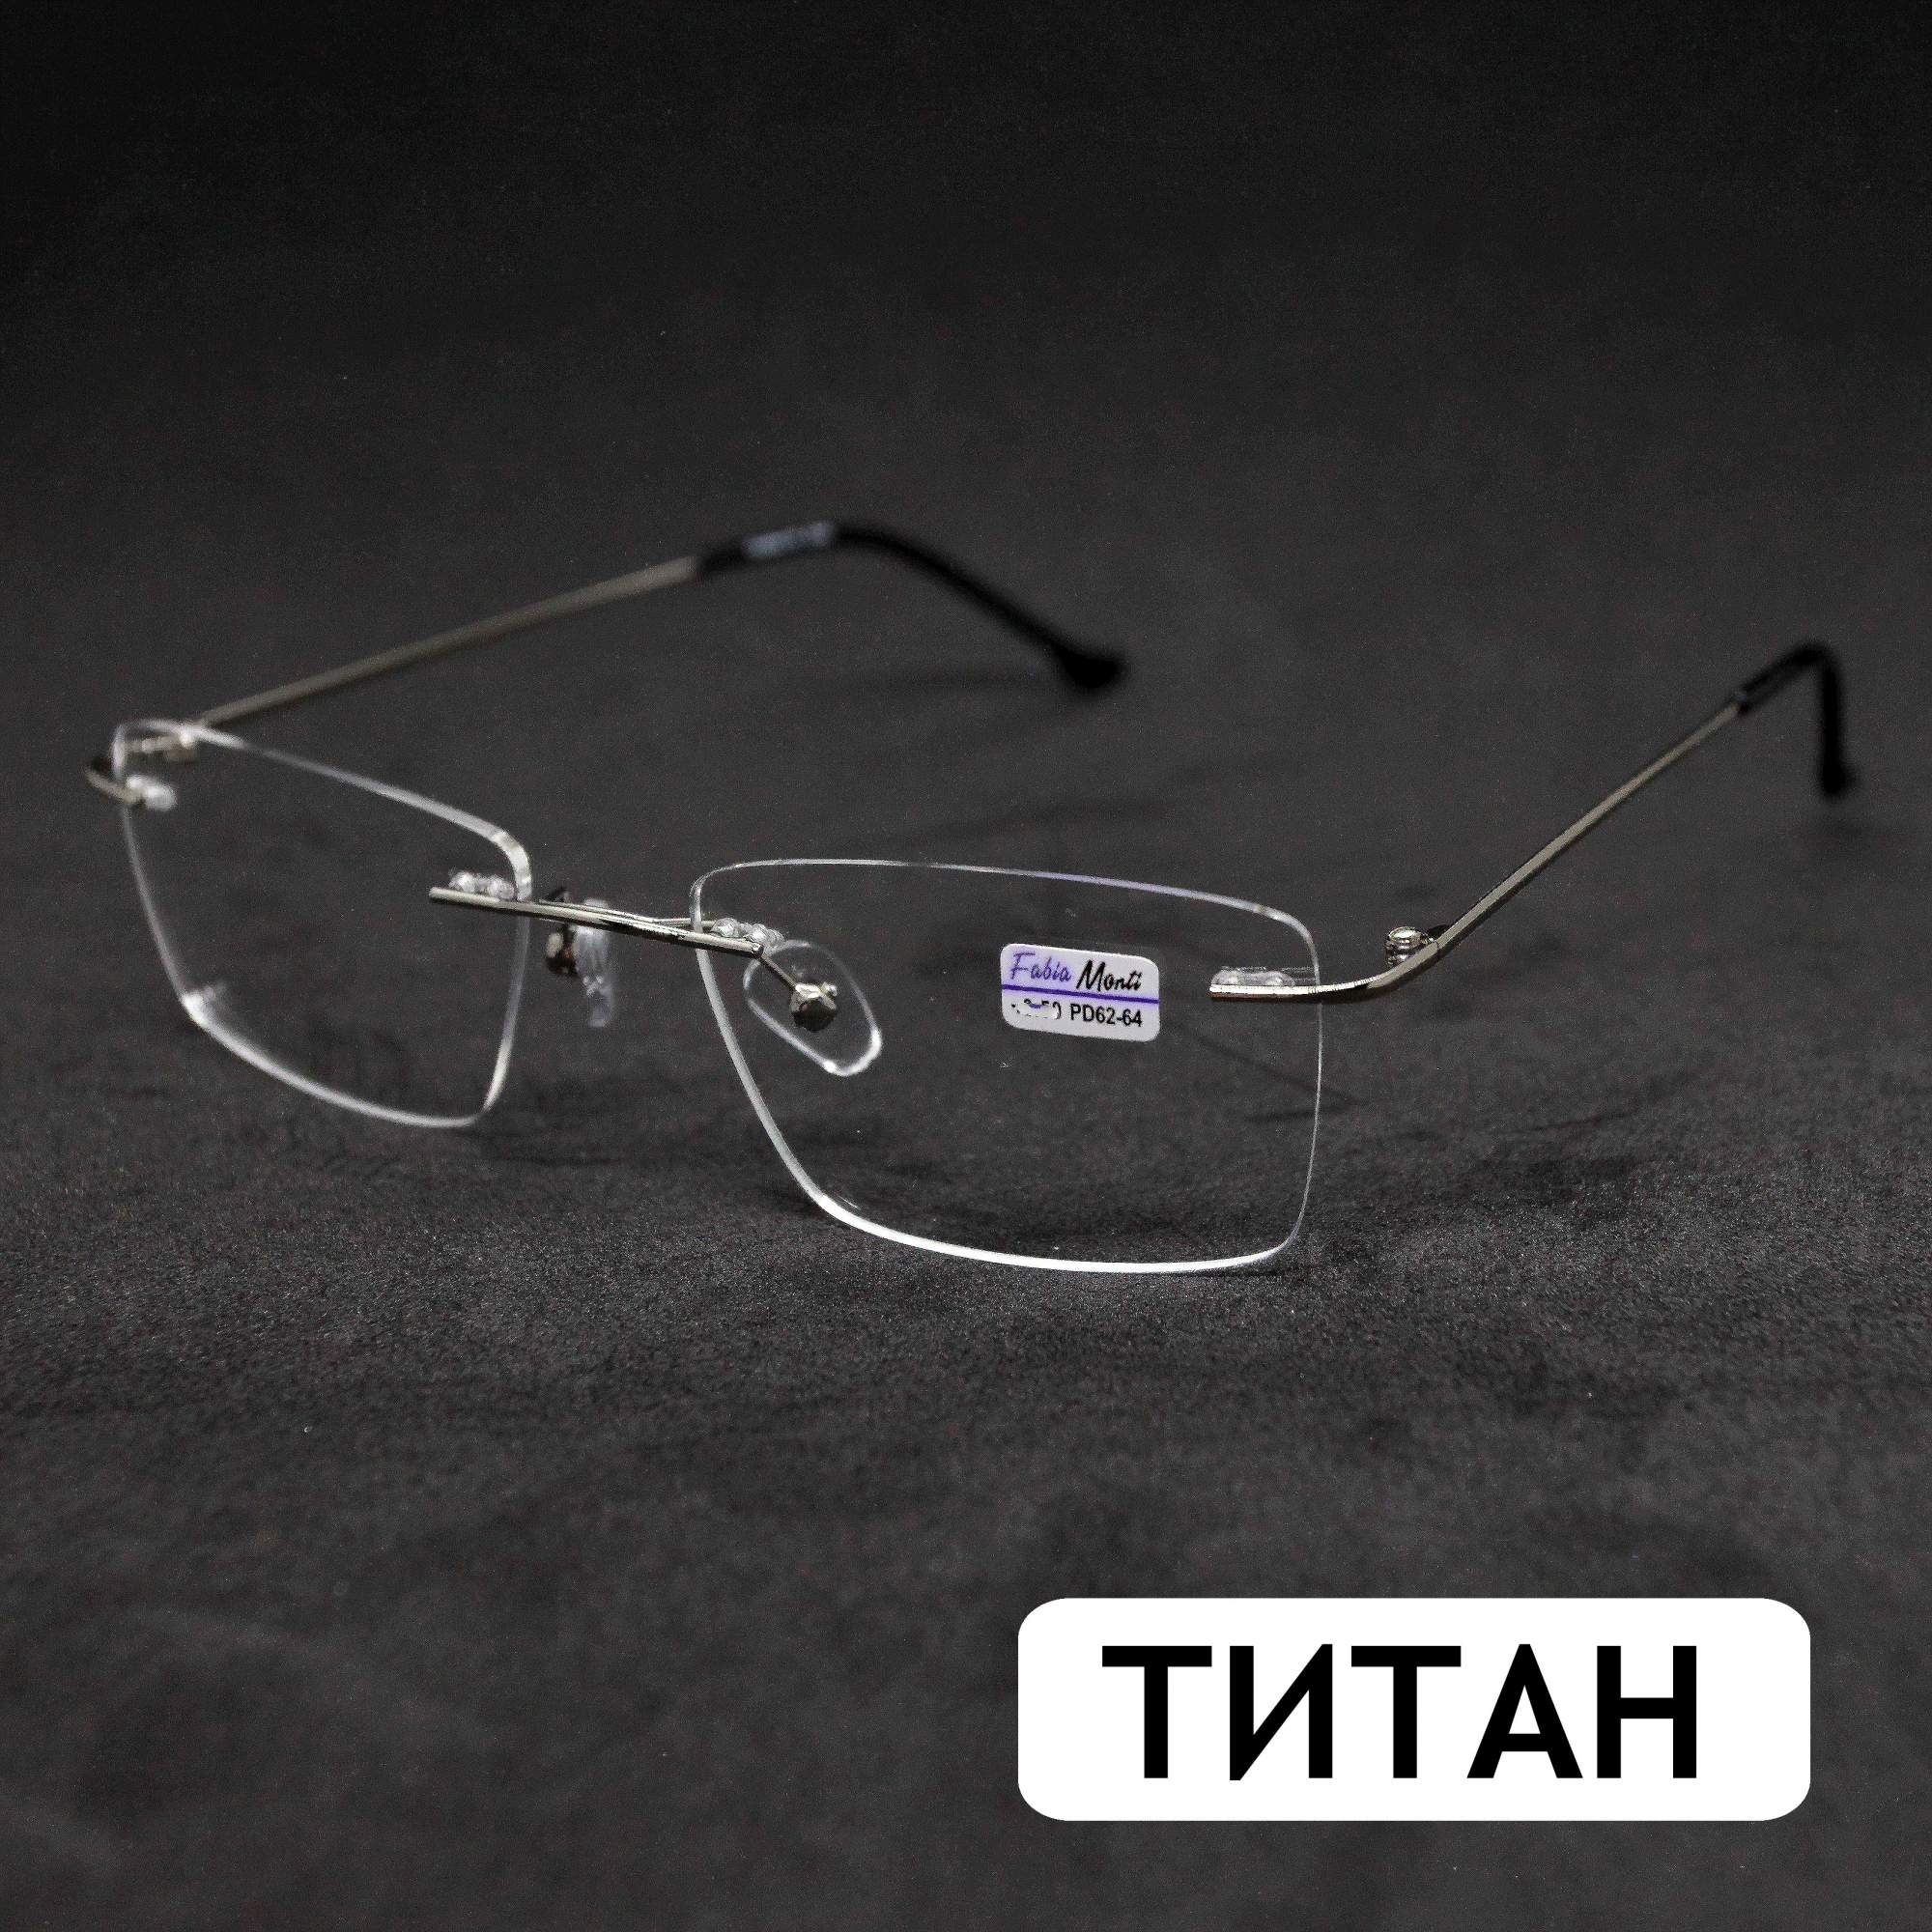 Безободковые очки FM 8959 +2.25, без футляра, оправа титан, серые, РЦ 62-64